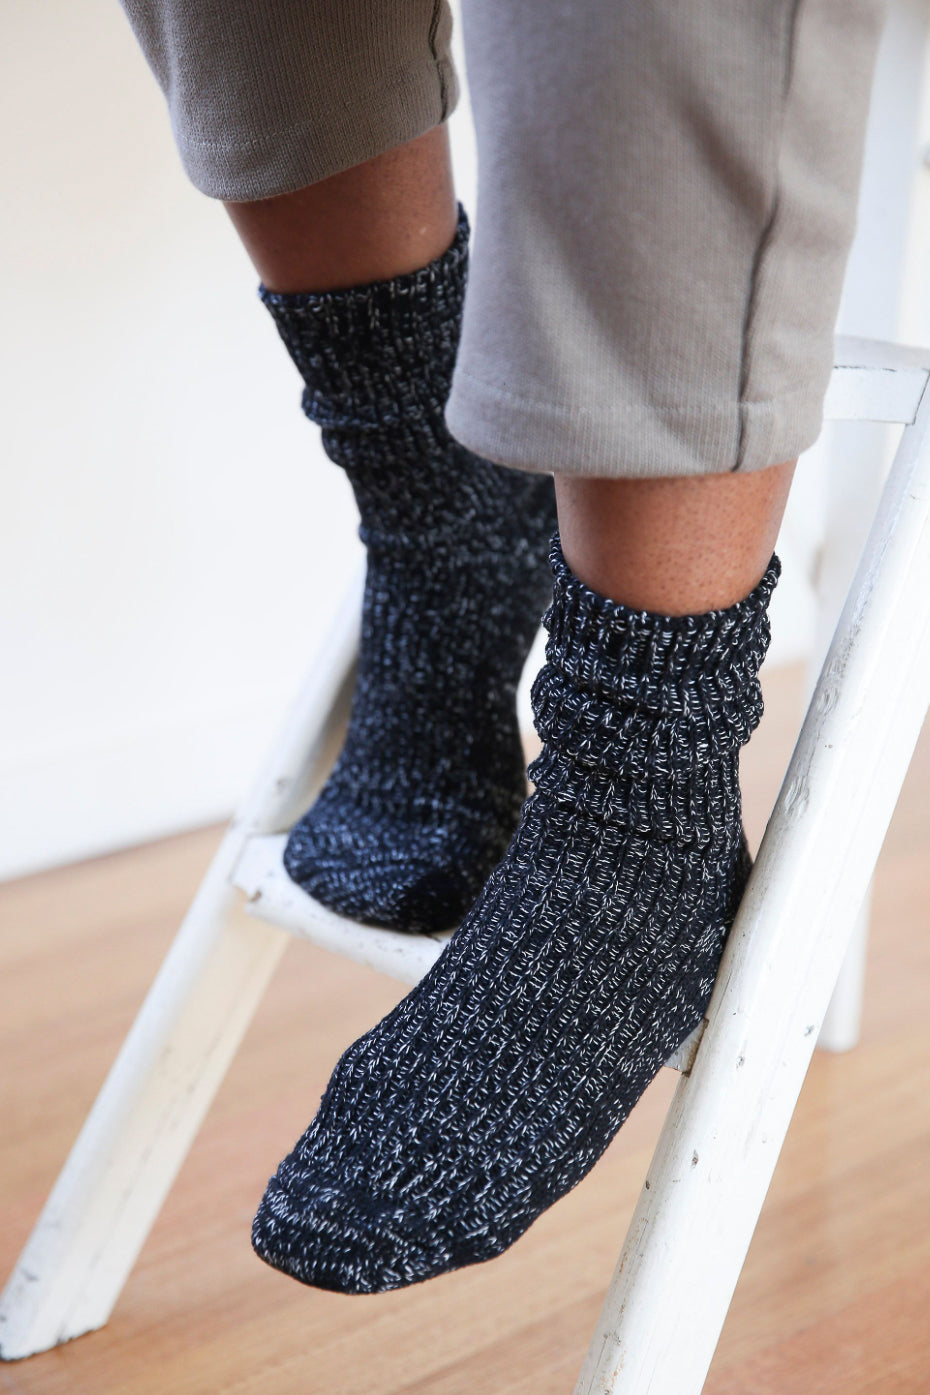 Nishiguchi Kutsushita: Boston Hemp Cotton Socks